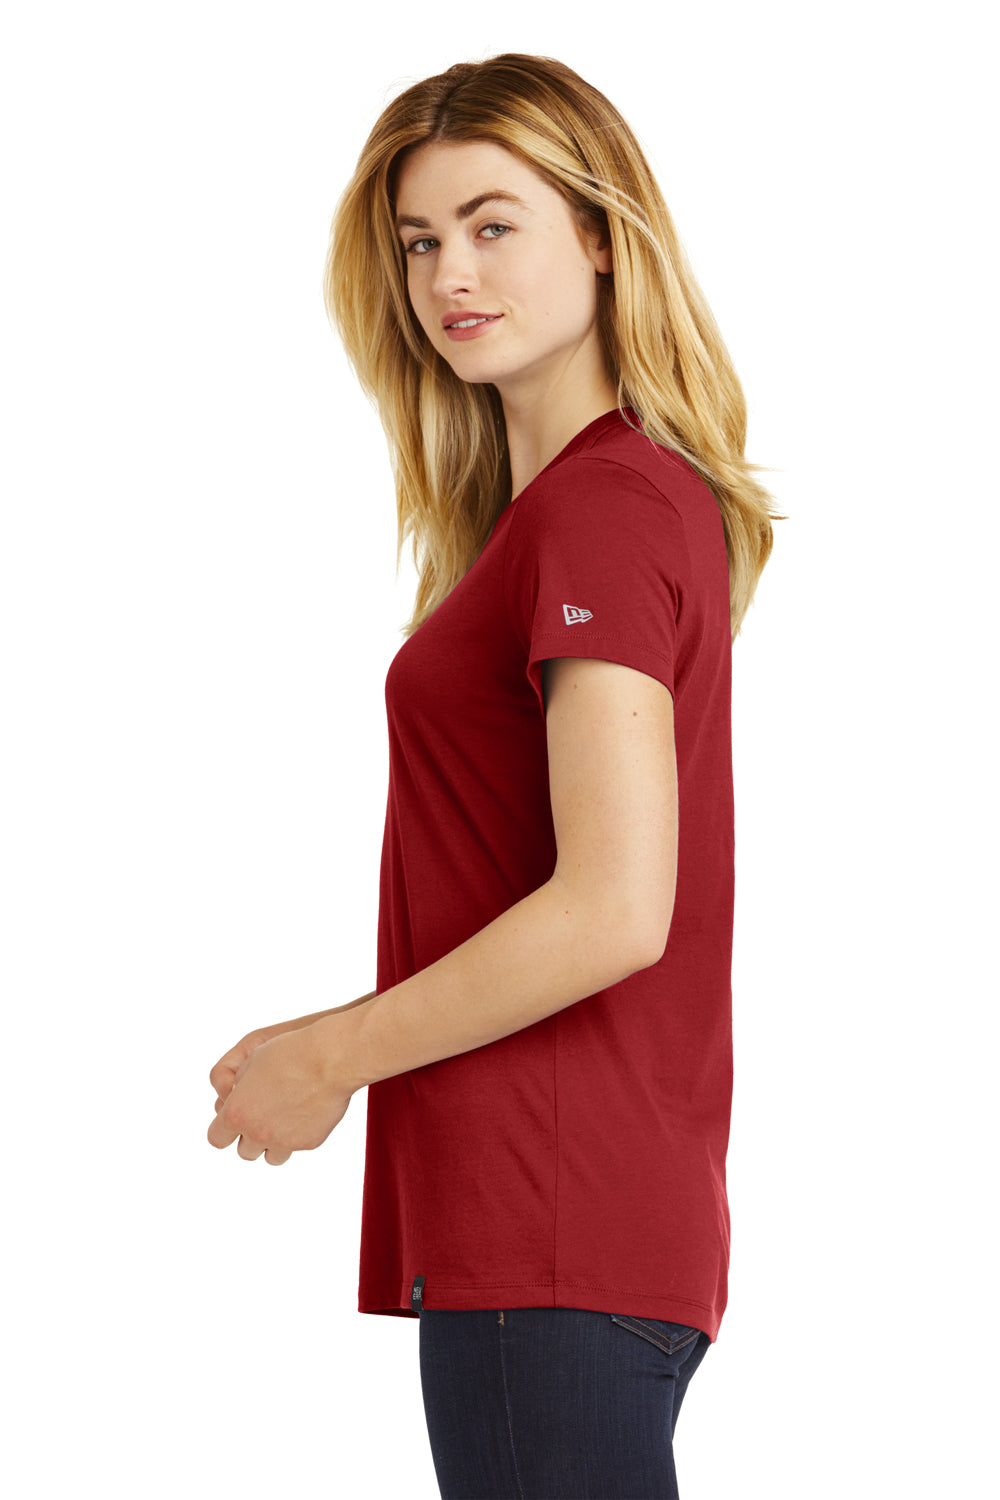 New Era LNEA100 Womens Heritage Short Sleeve Crewneck T-Shirt Crimson Red Side